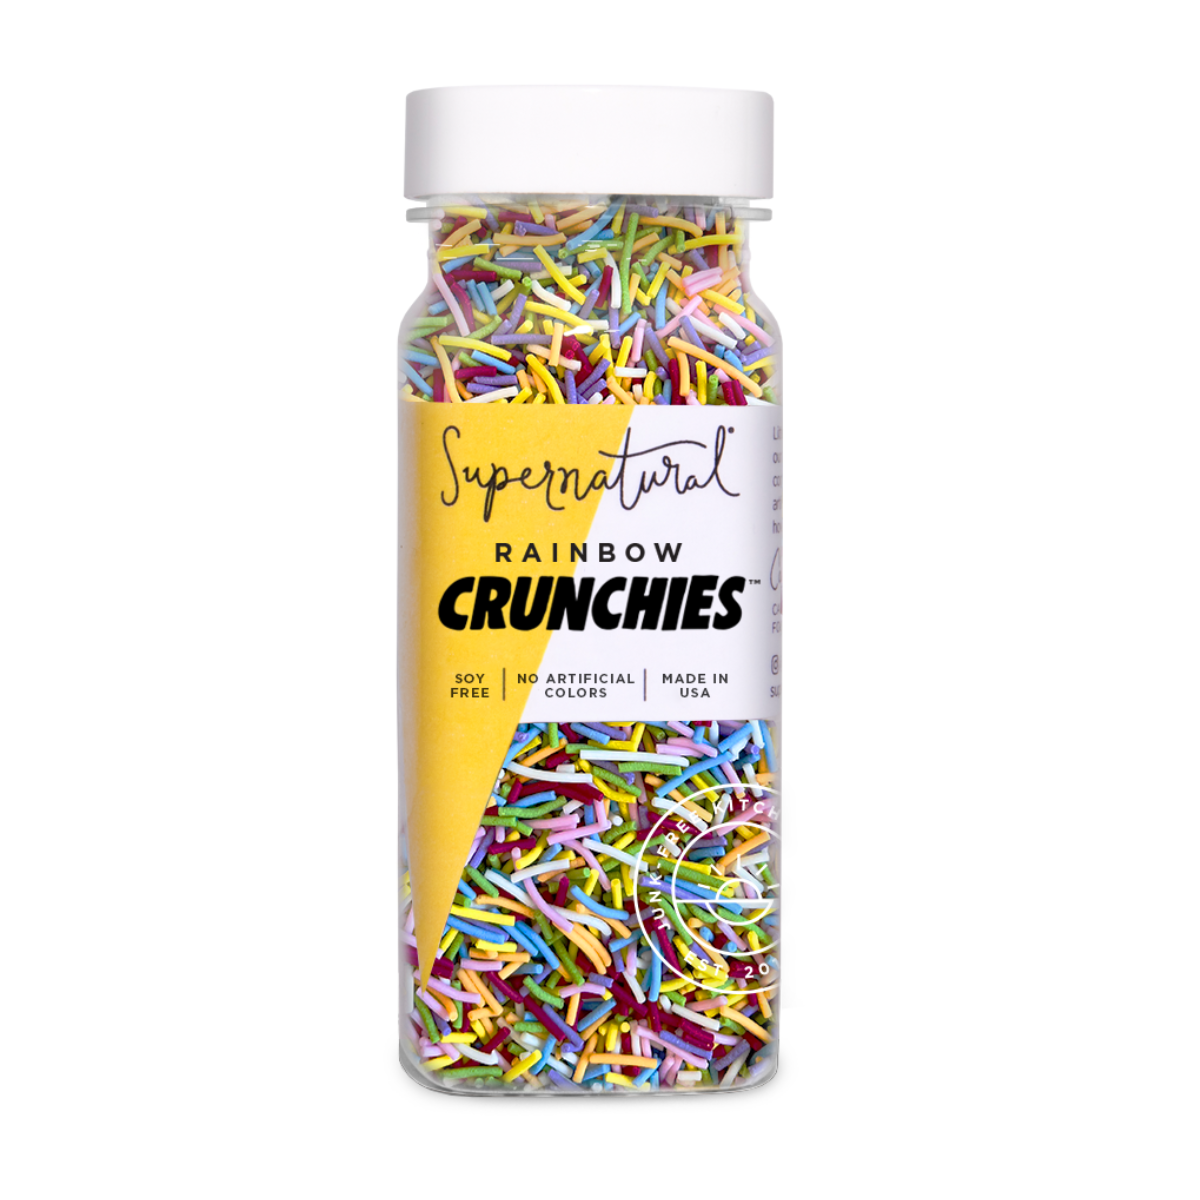 Supernatural Rainbow Crunchies Natural Sprinkles 3 oz